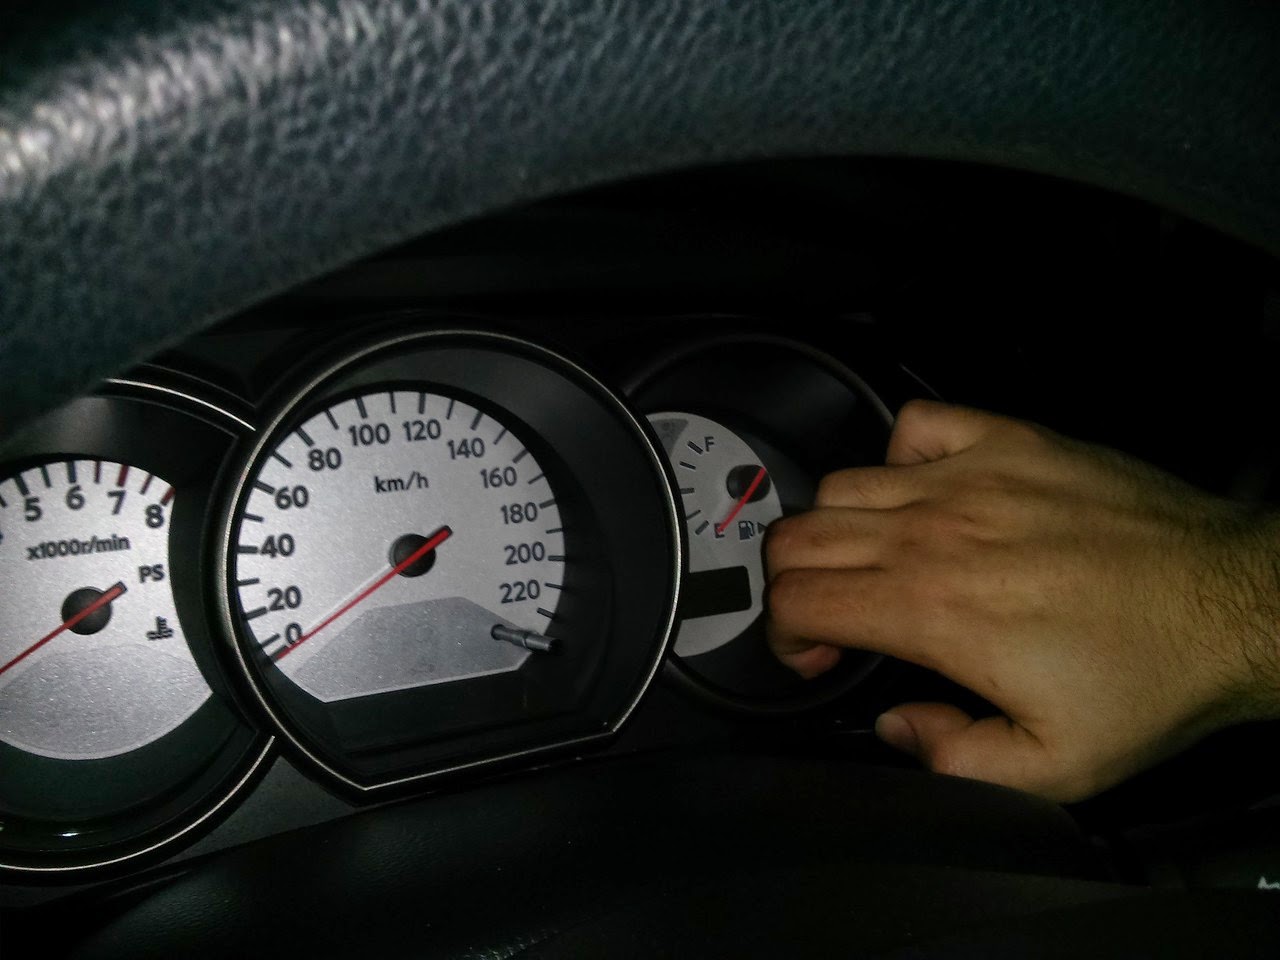 DIY Bongkar Speedometer Grand Livina Untuk Ganti Warna LED Saajpc